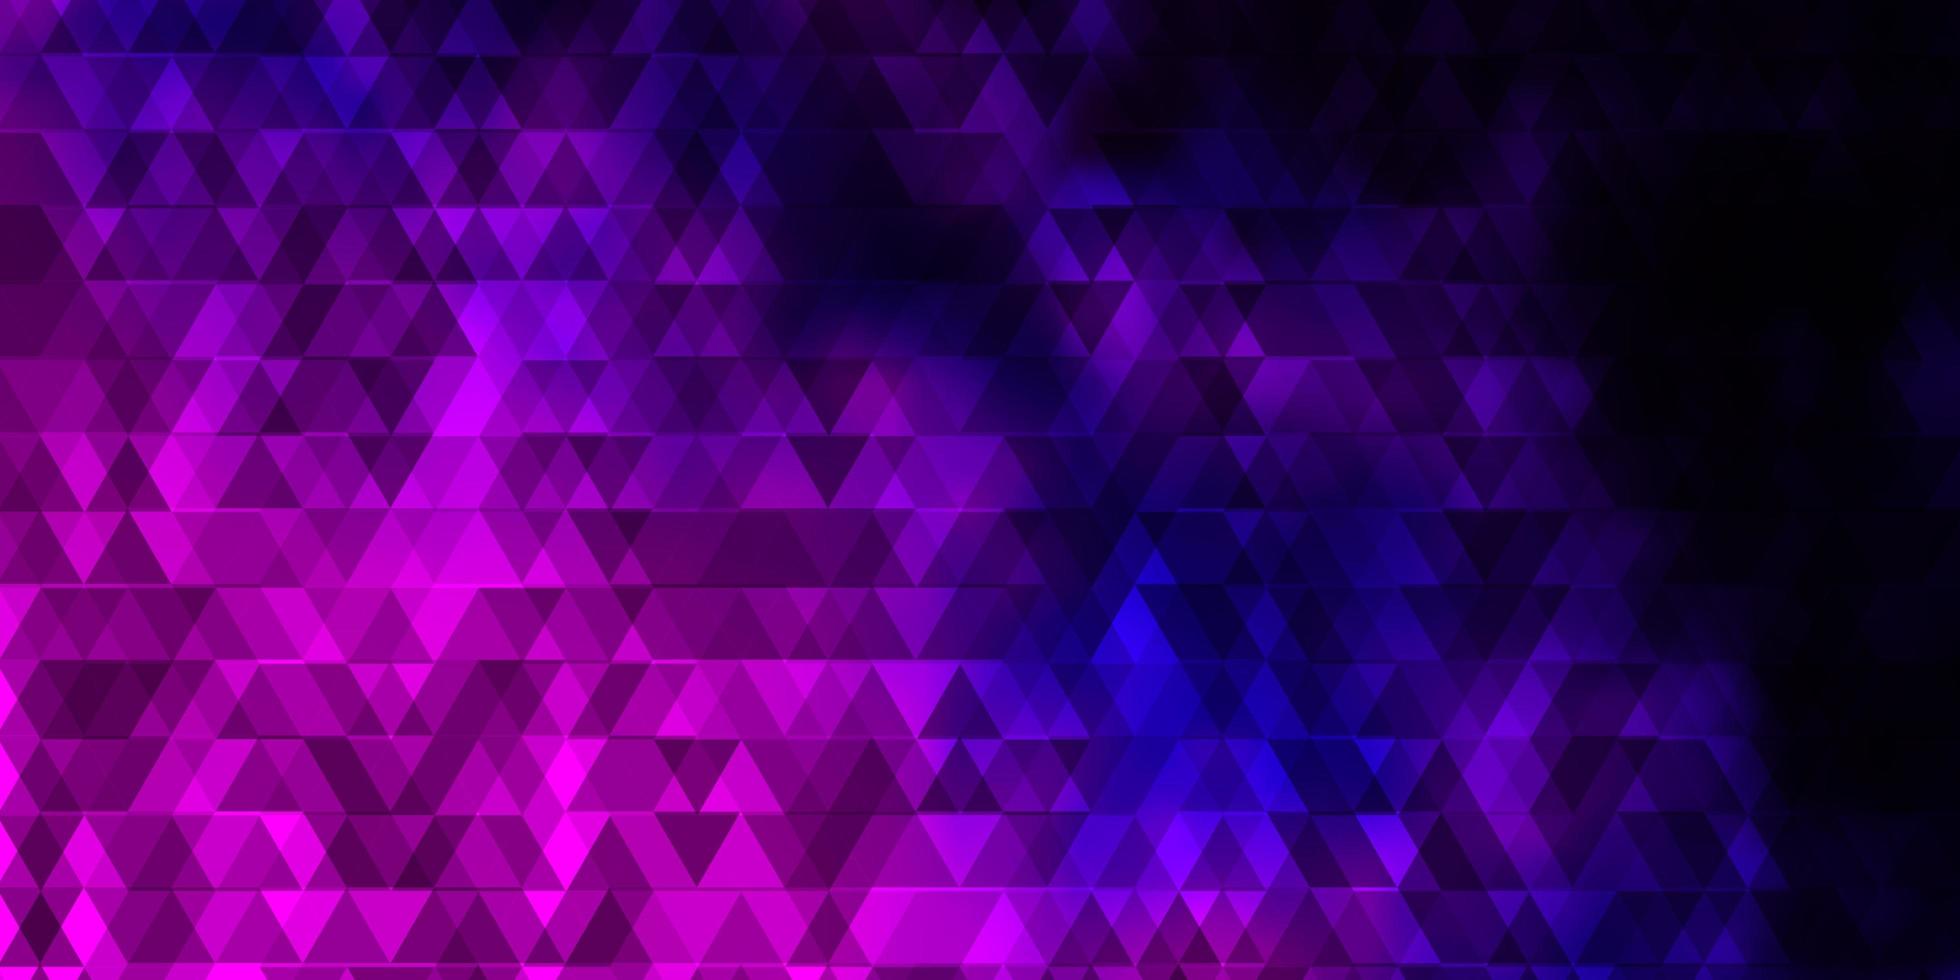 Dark Purple vector backdrop with lines, triangles.